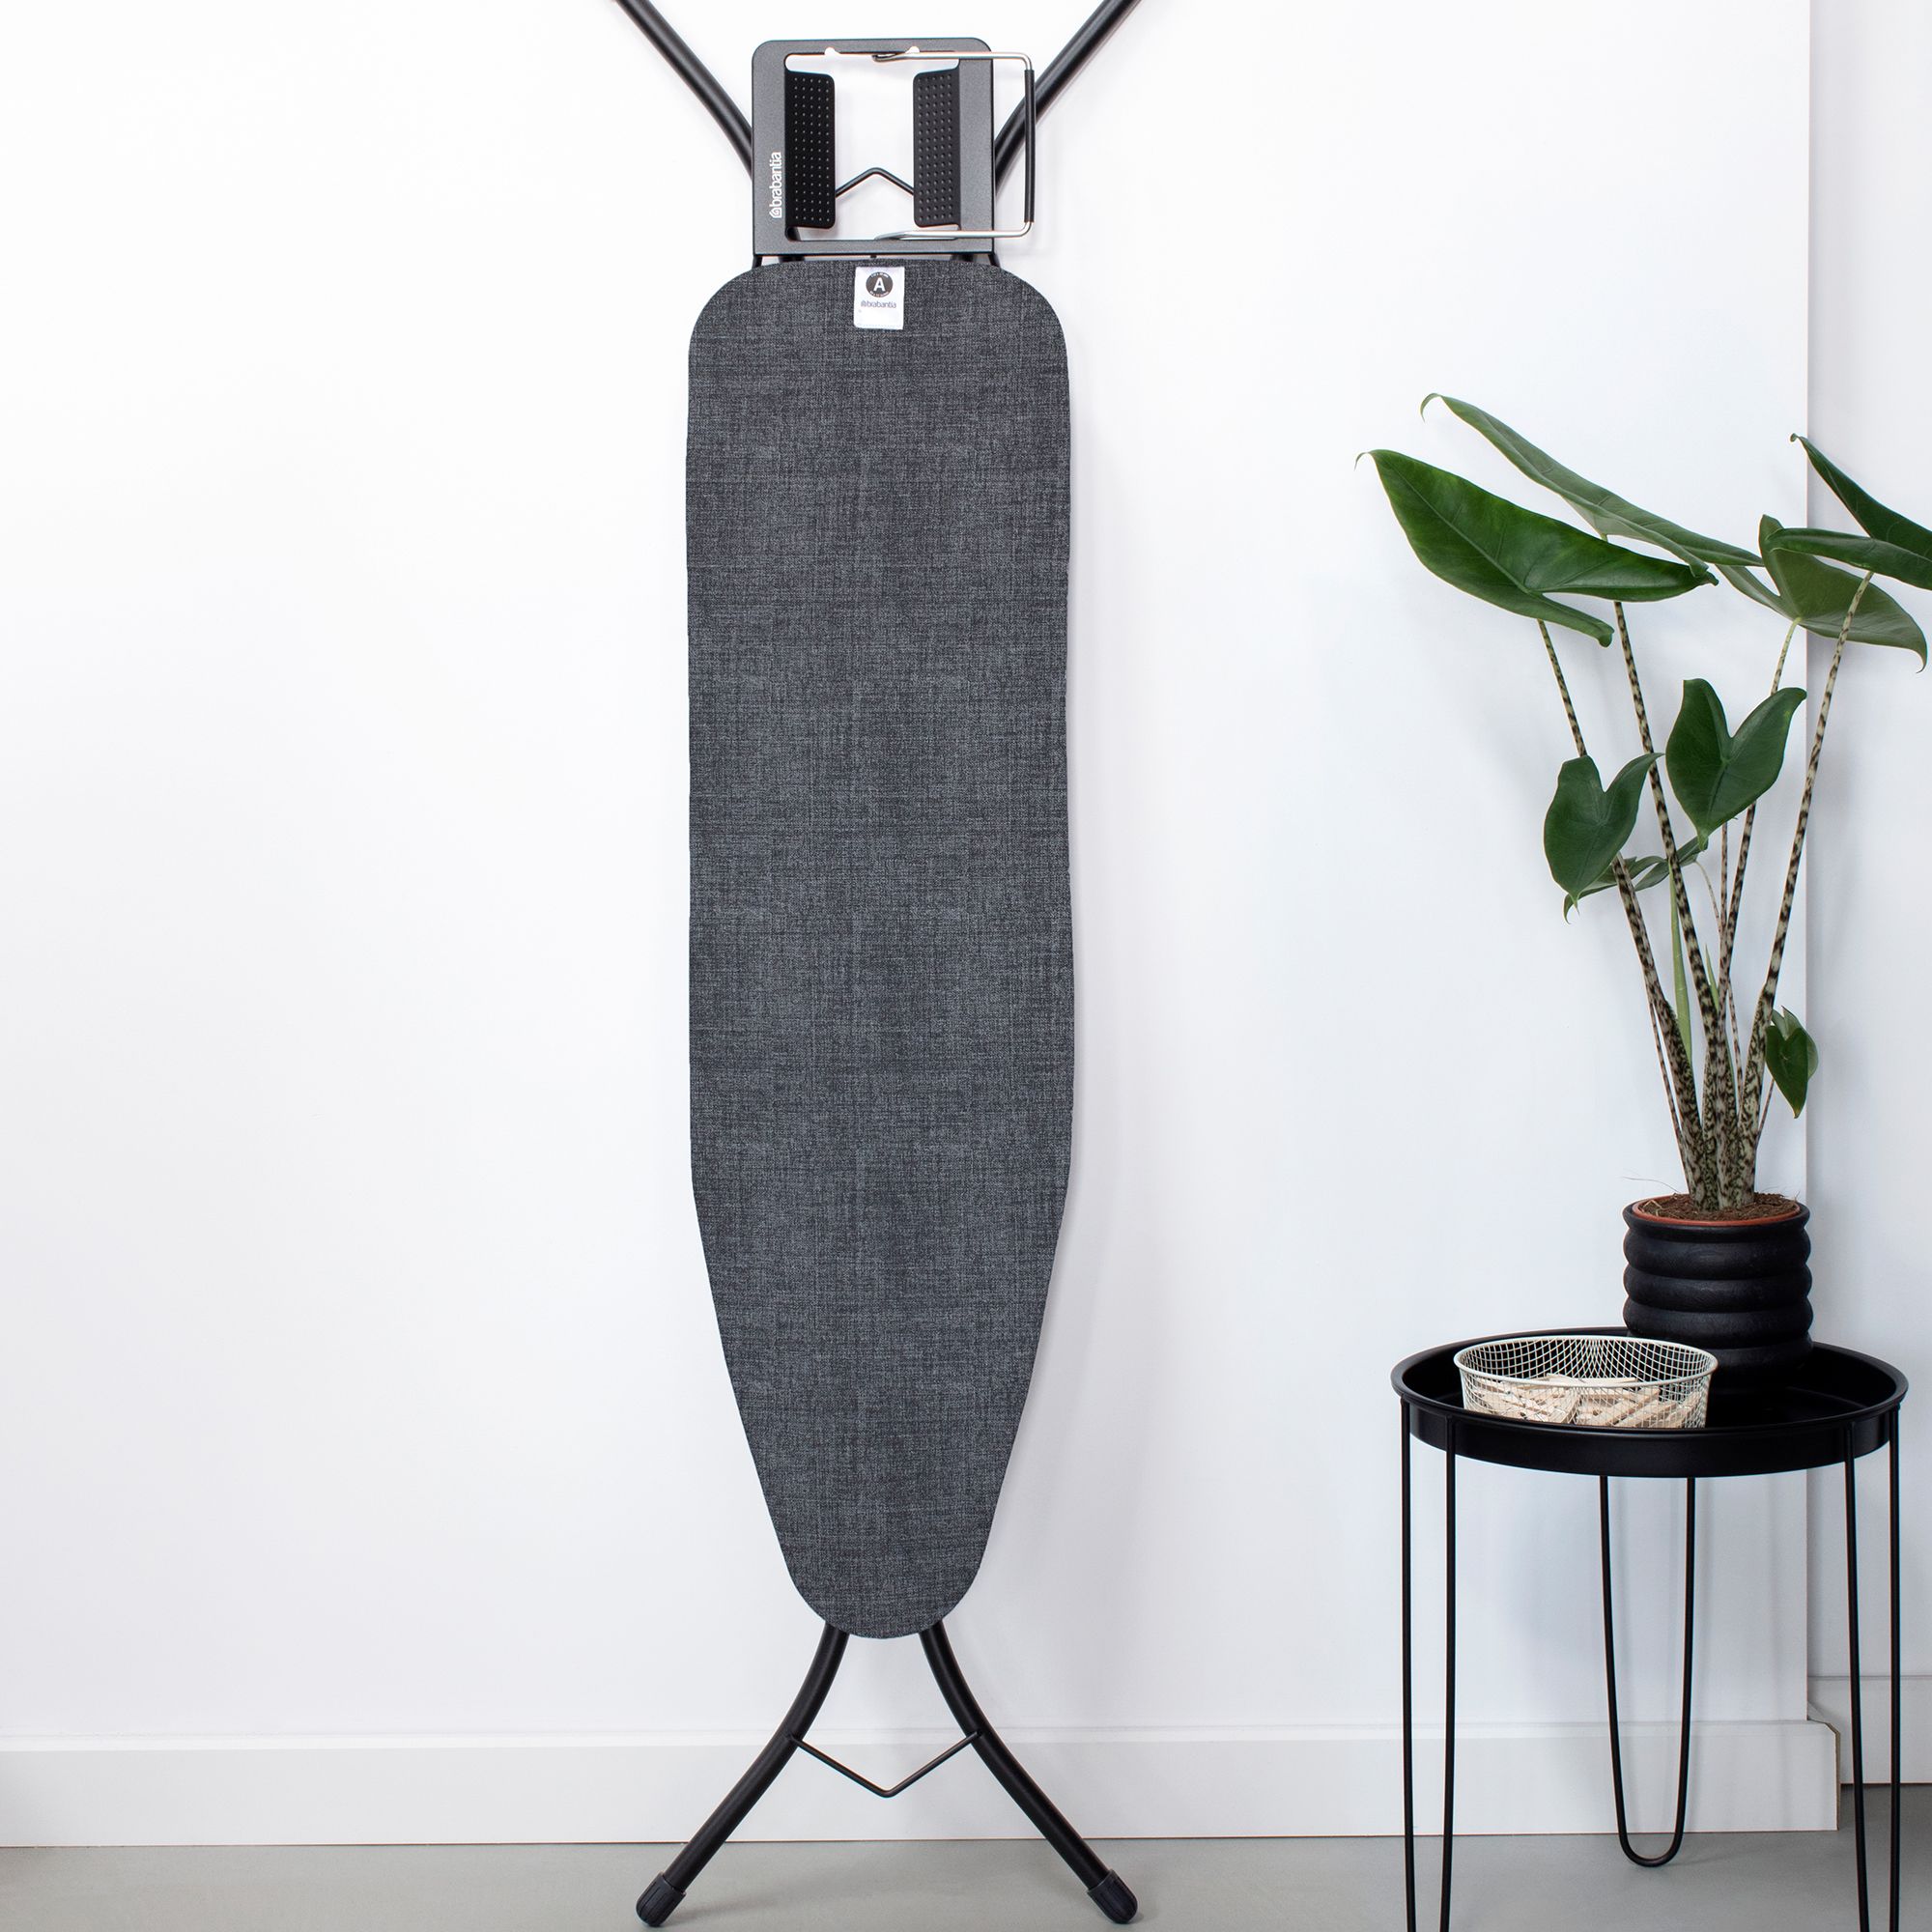 Brabantia Denim Black Ironing board (L)128cm (W)48cm